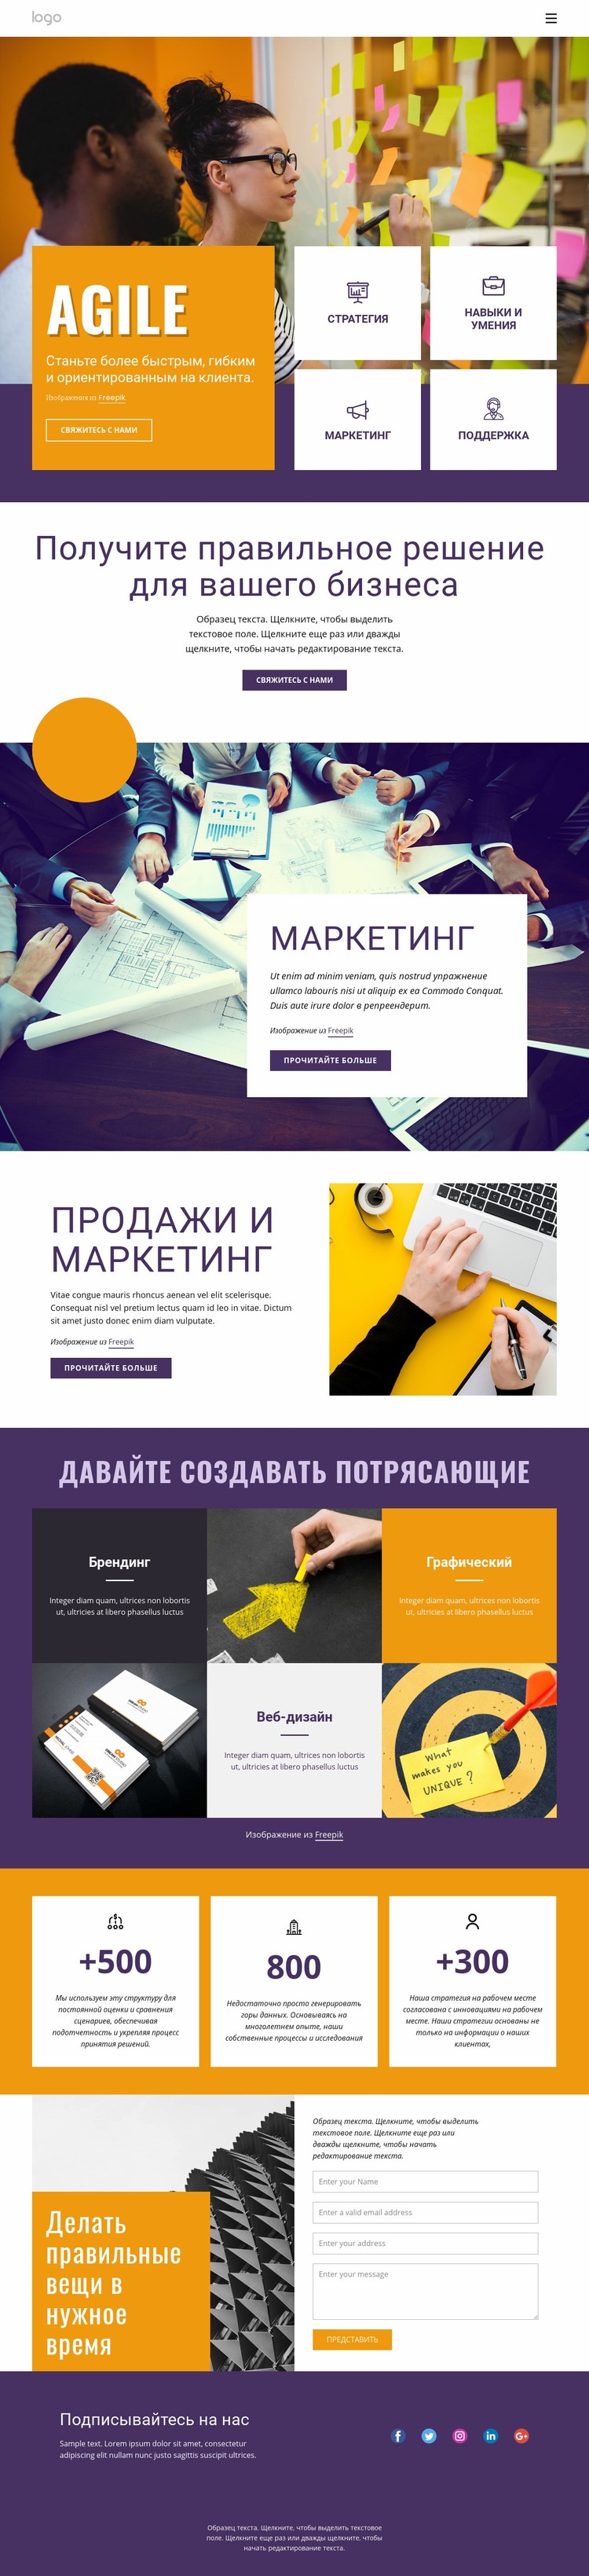 ИТ бизнес услуги Мокап веб-сайта